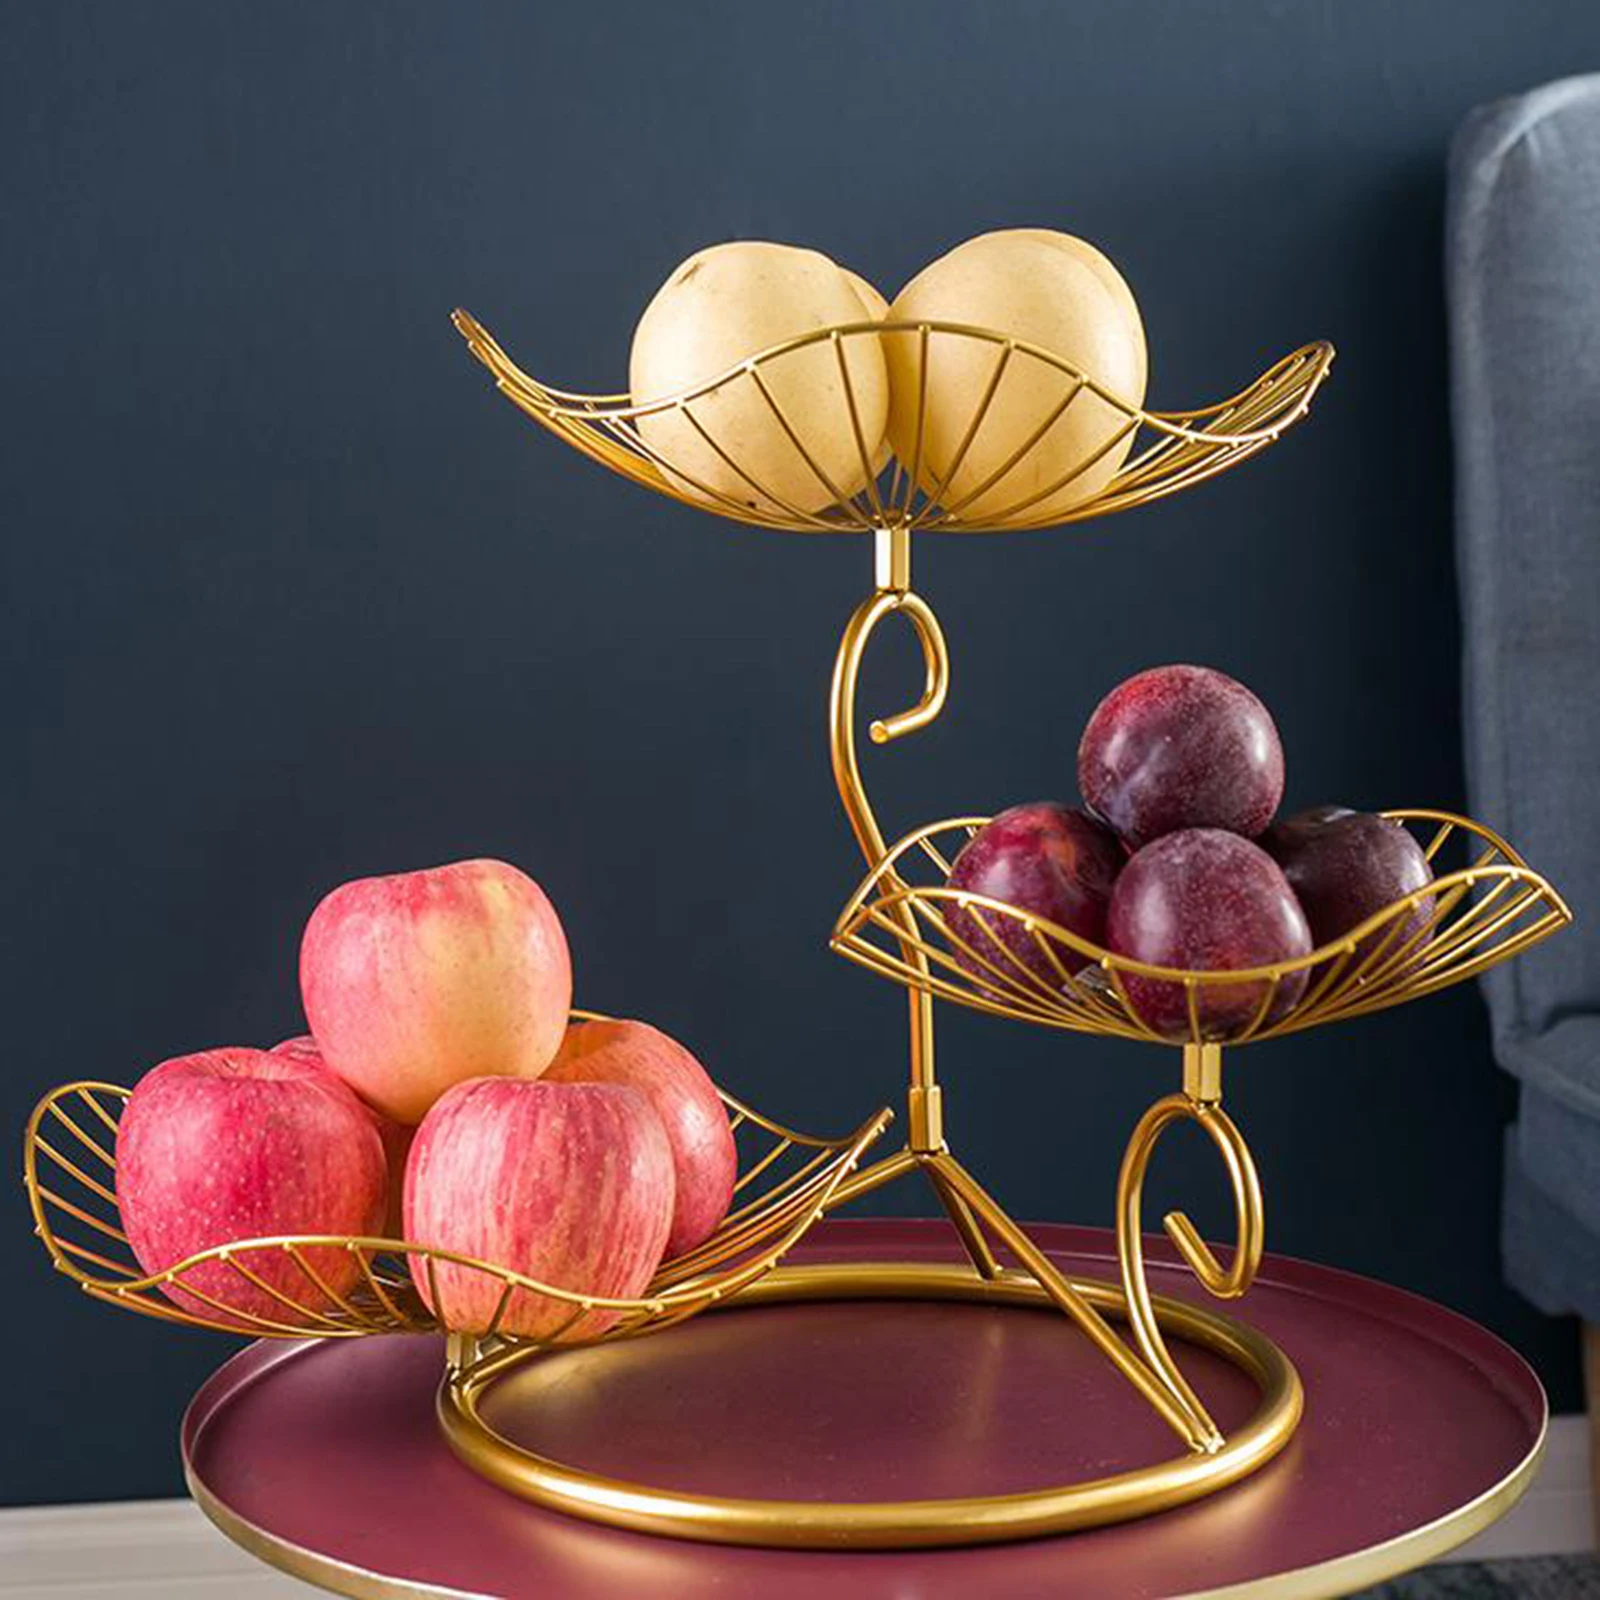 Metal Wire Fruit Basket Minimalist Iron Fruit Bowls Sanck Candy Bread Holder, 3 Tier